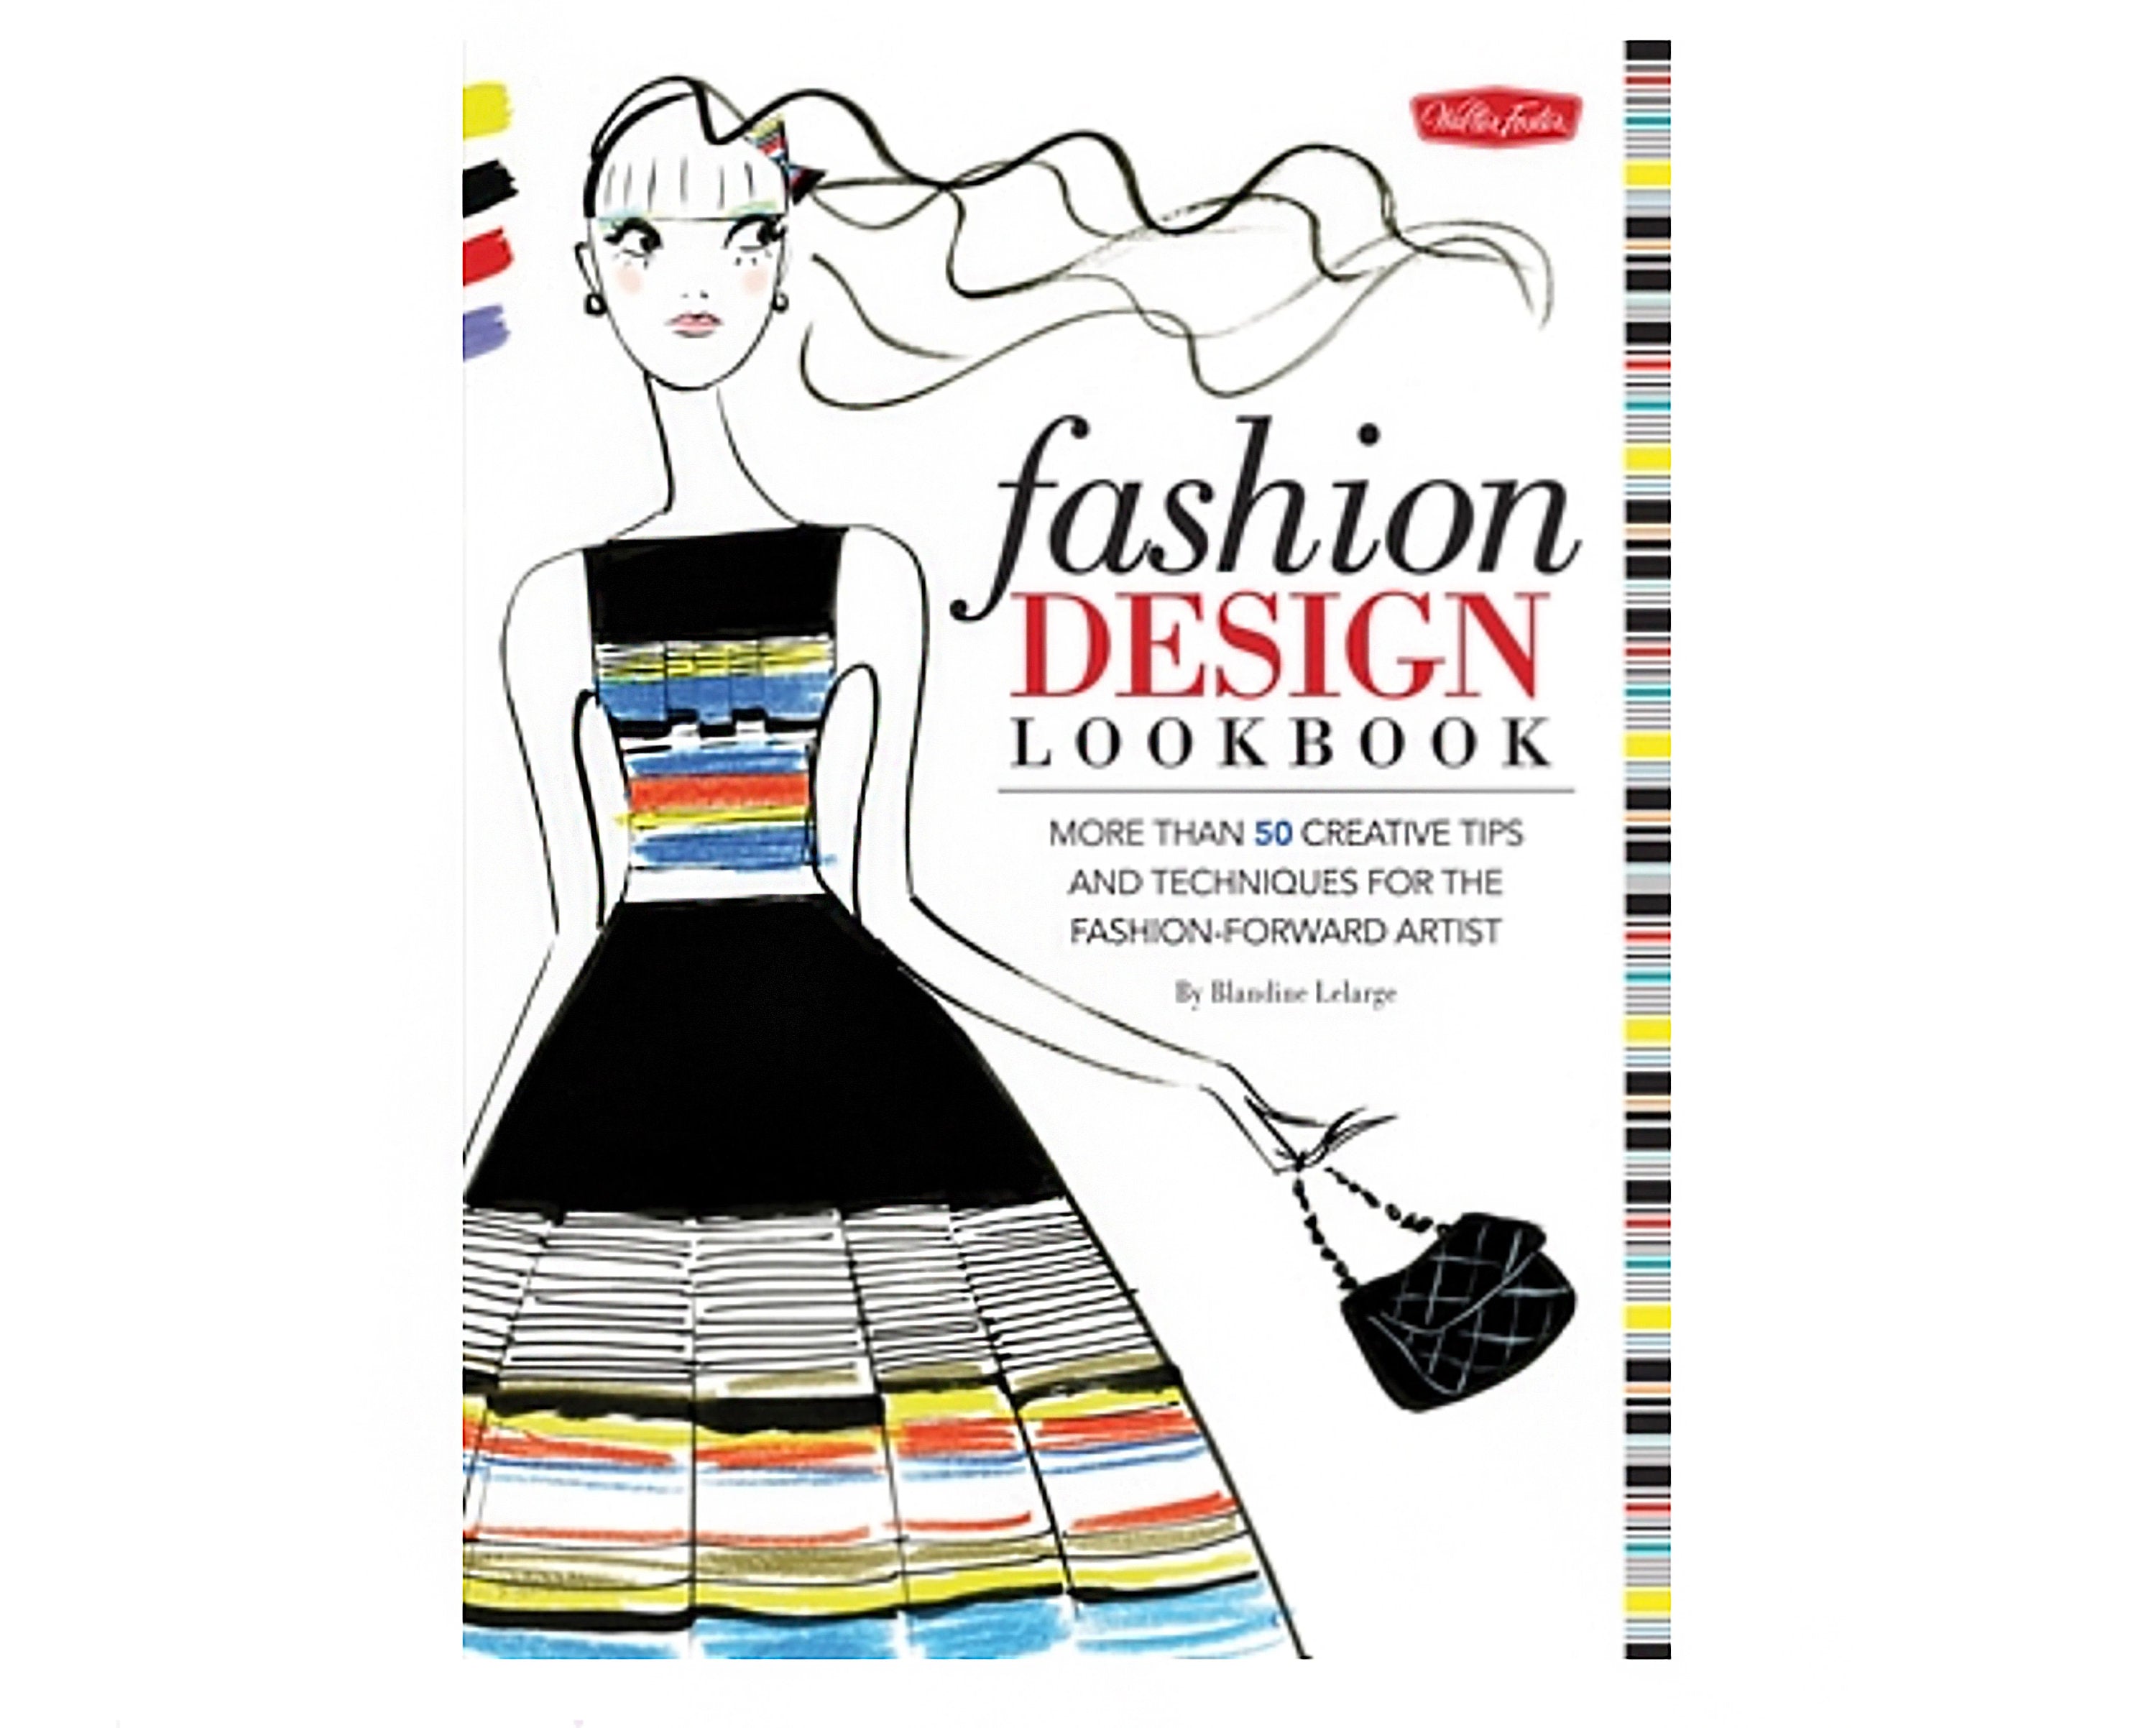 Fashion Design Lookbook